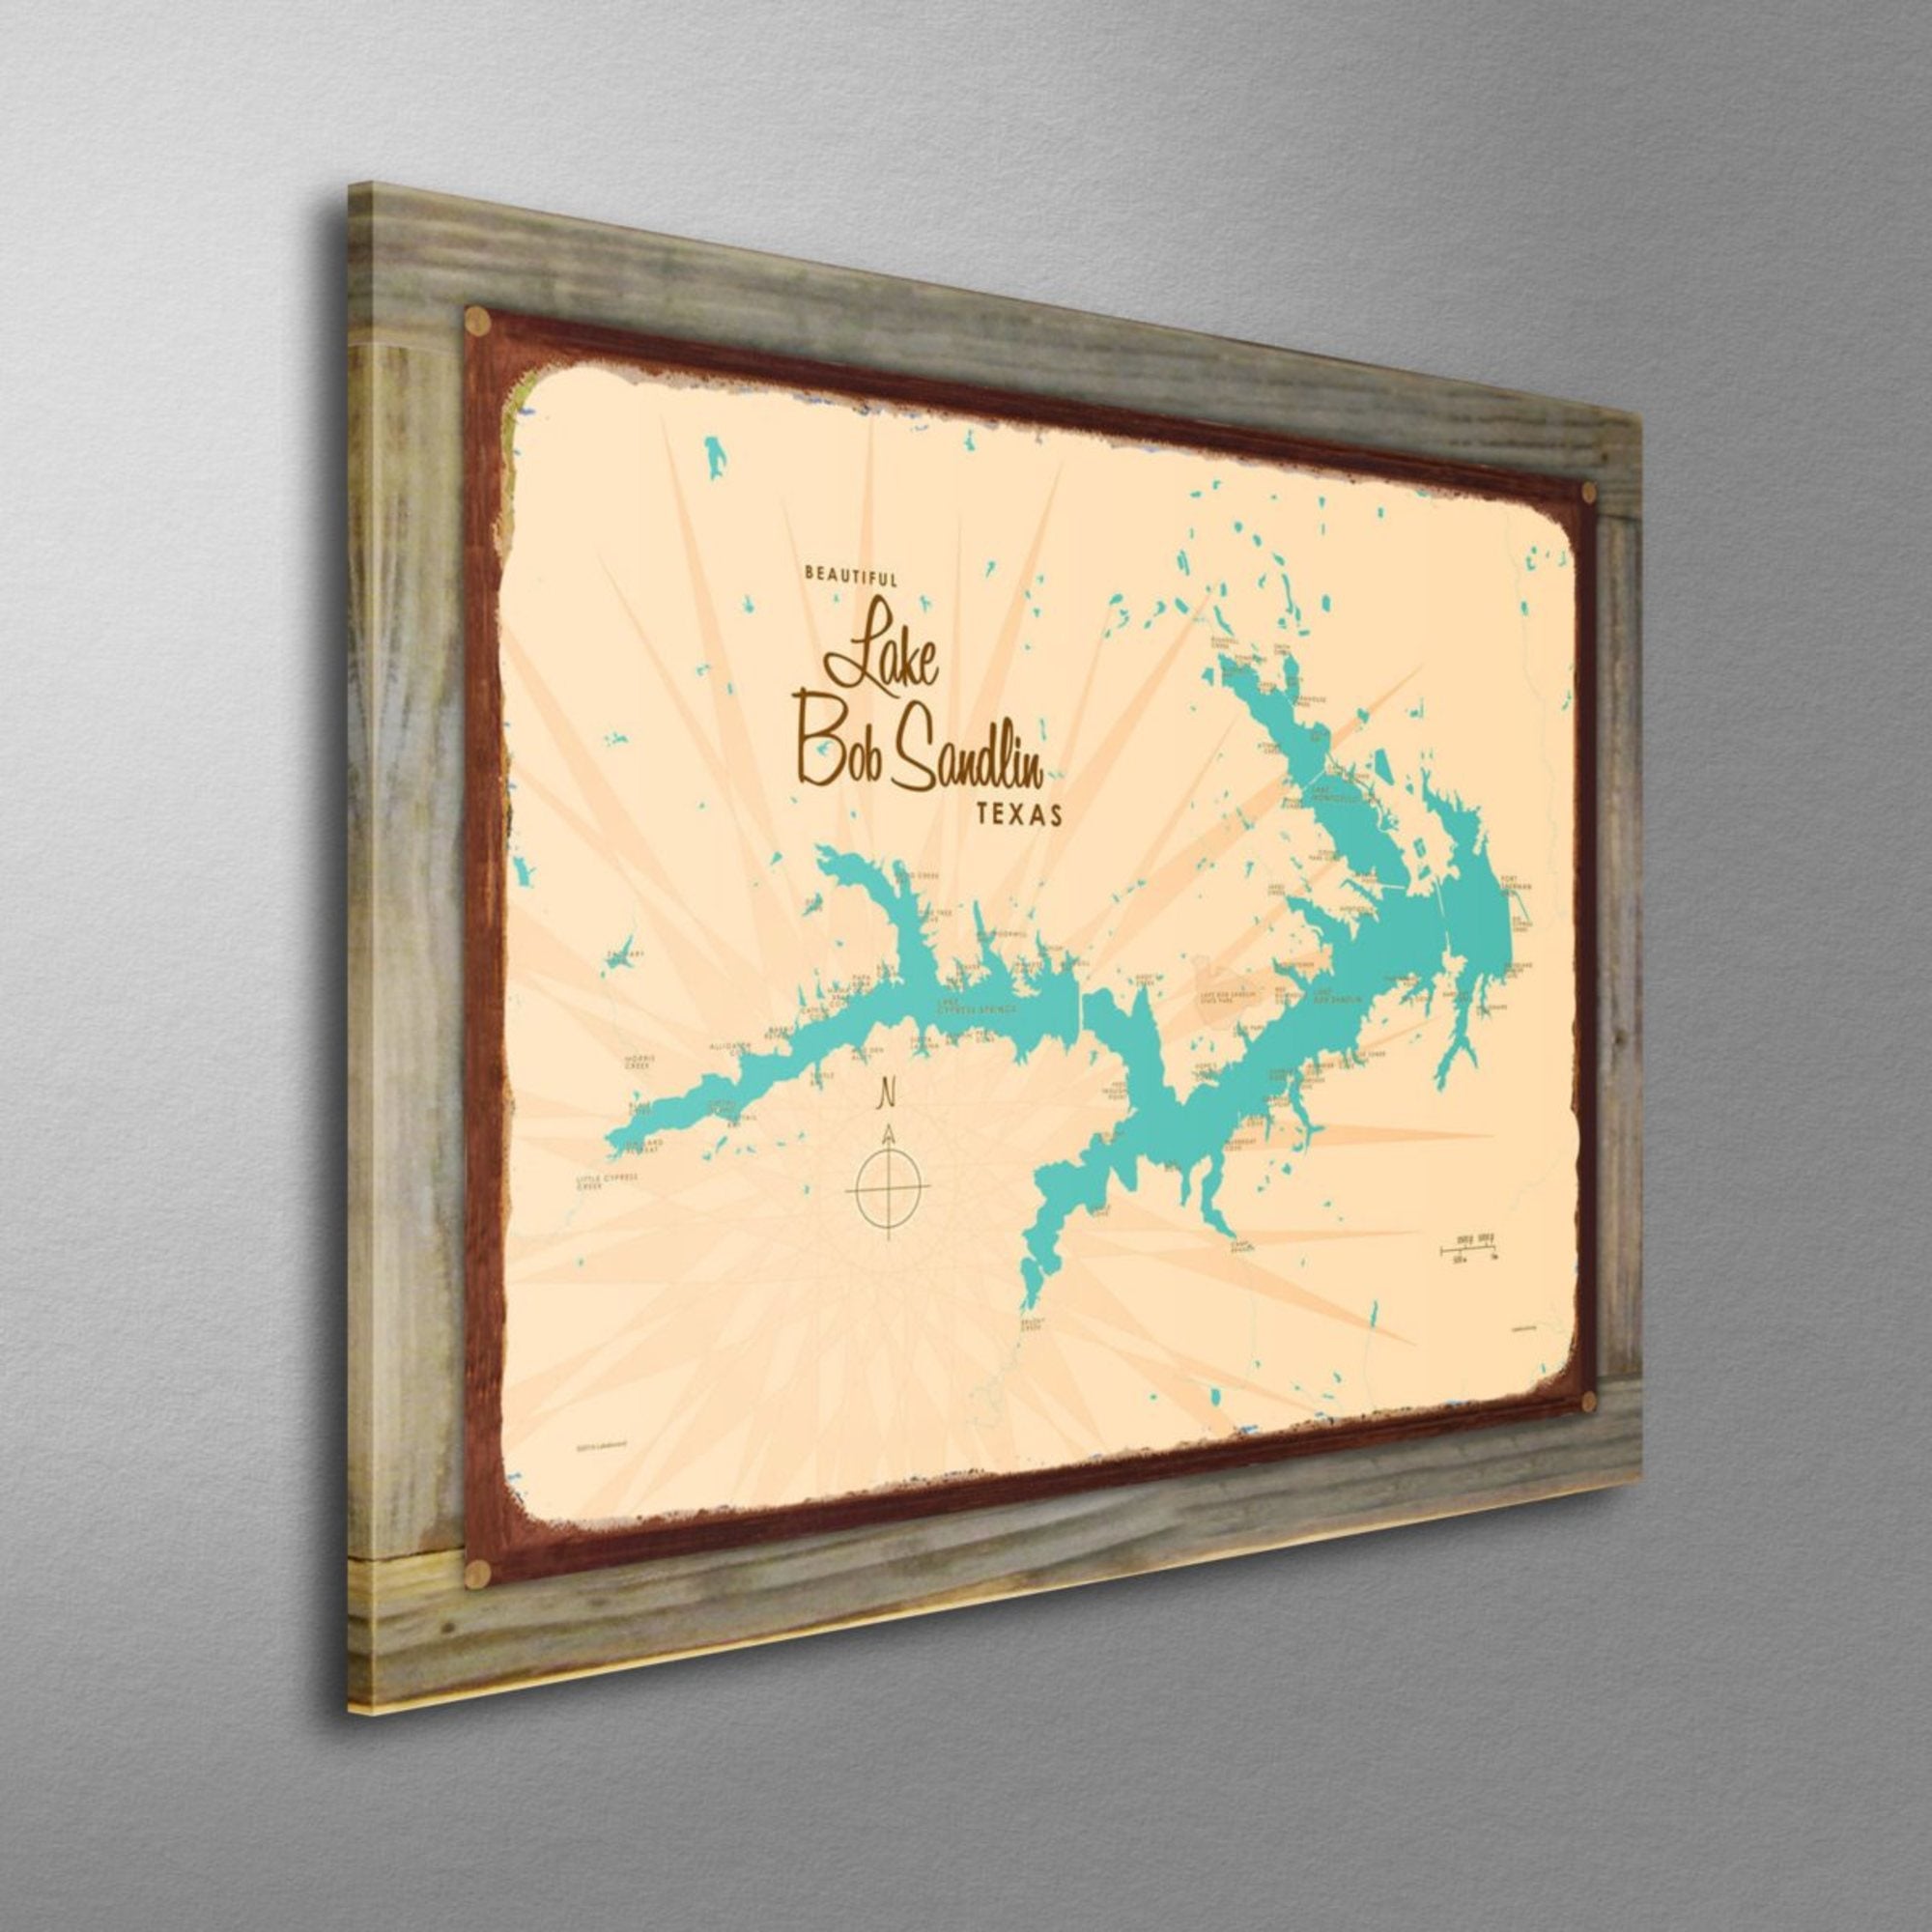 Lake Bob Sandlin Texas, Wood-Mounted Rustic Metal Sign Map Art